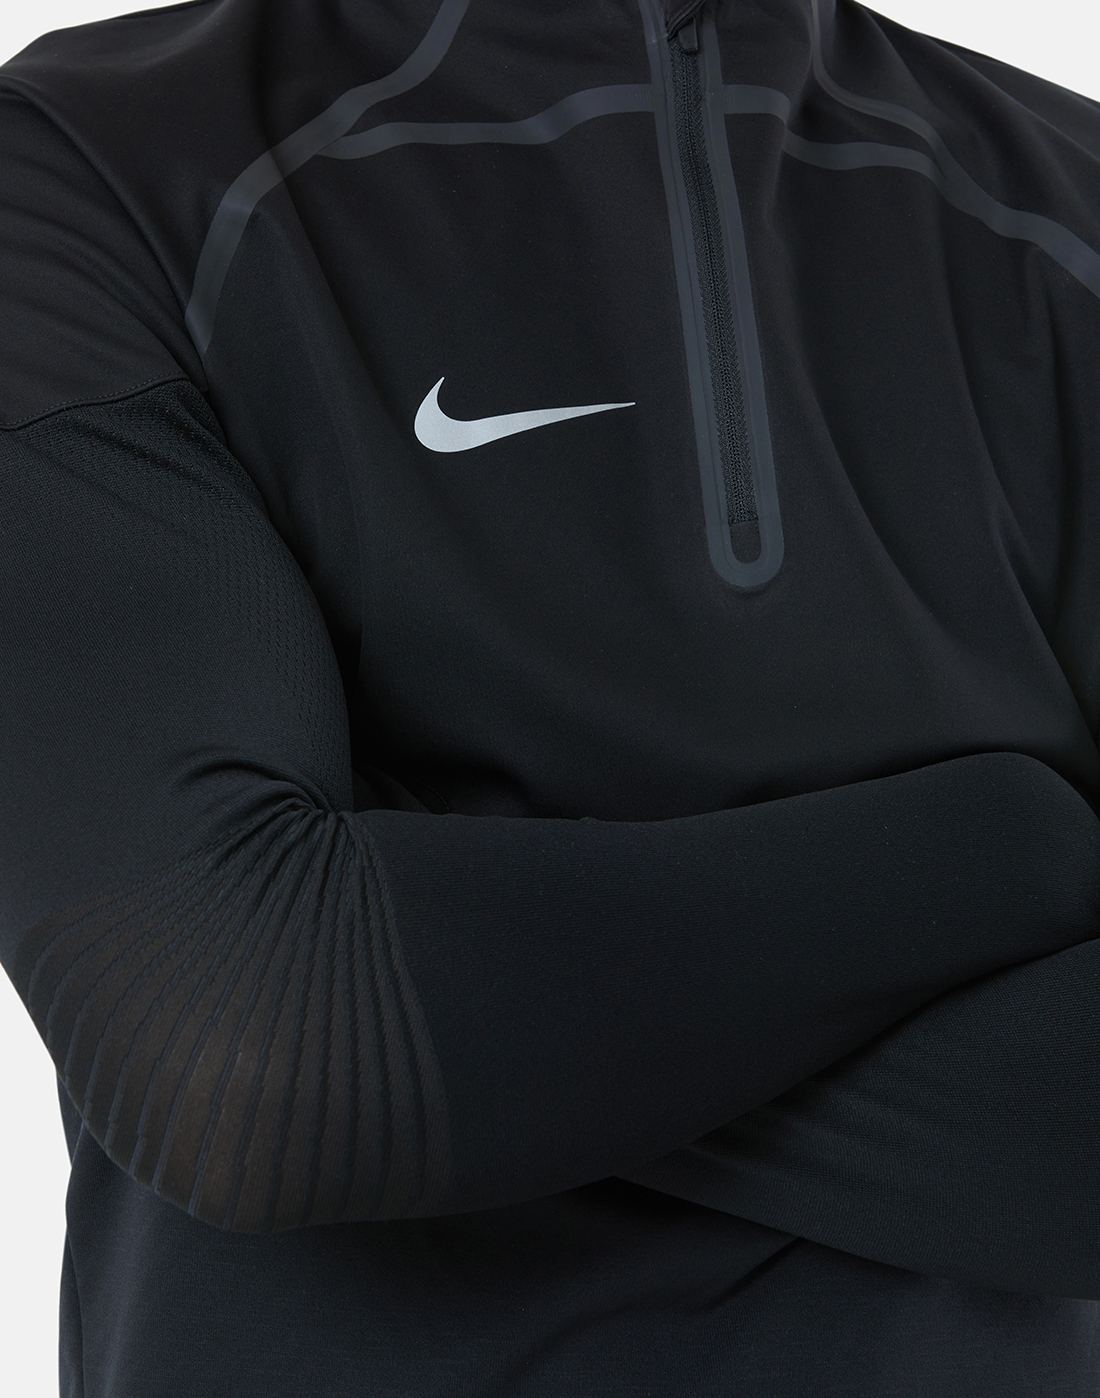 Nike Mens Winter Warrior Elite Strike Drill Top - Black | Life Style ...